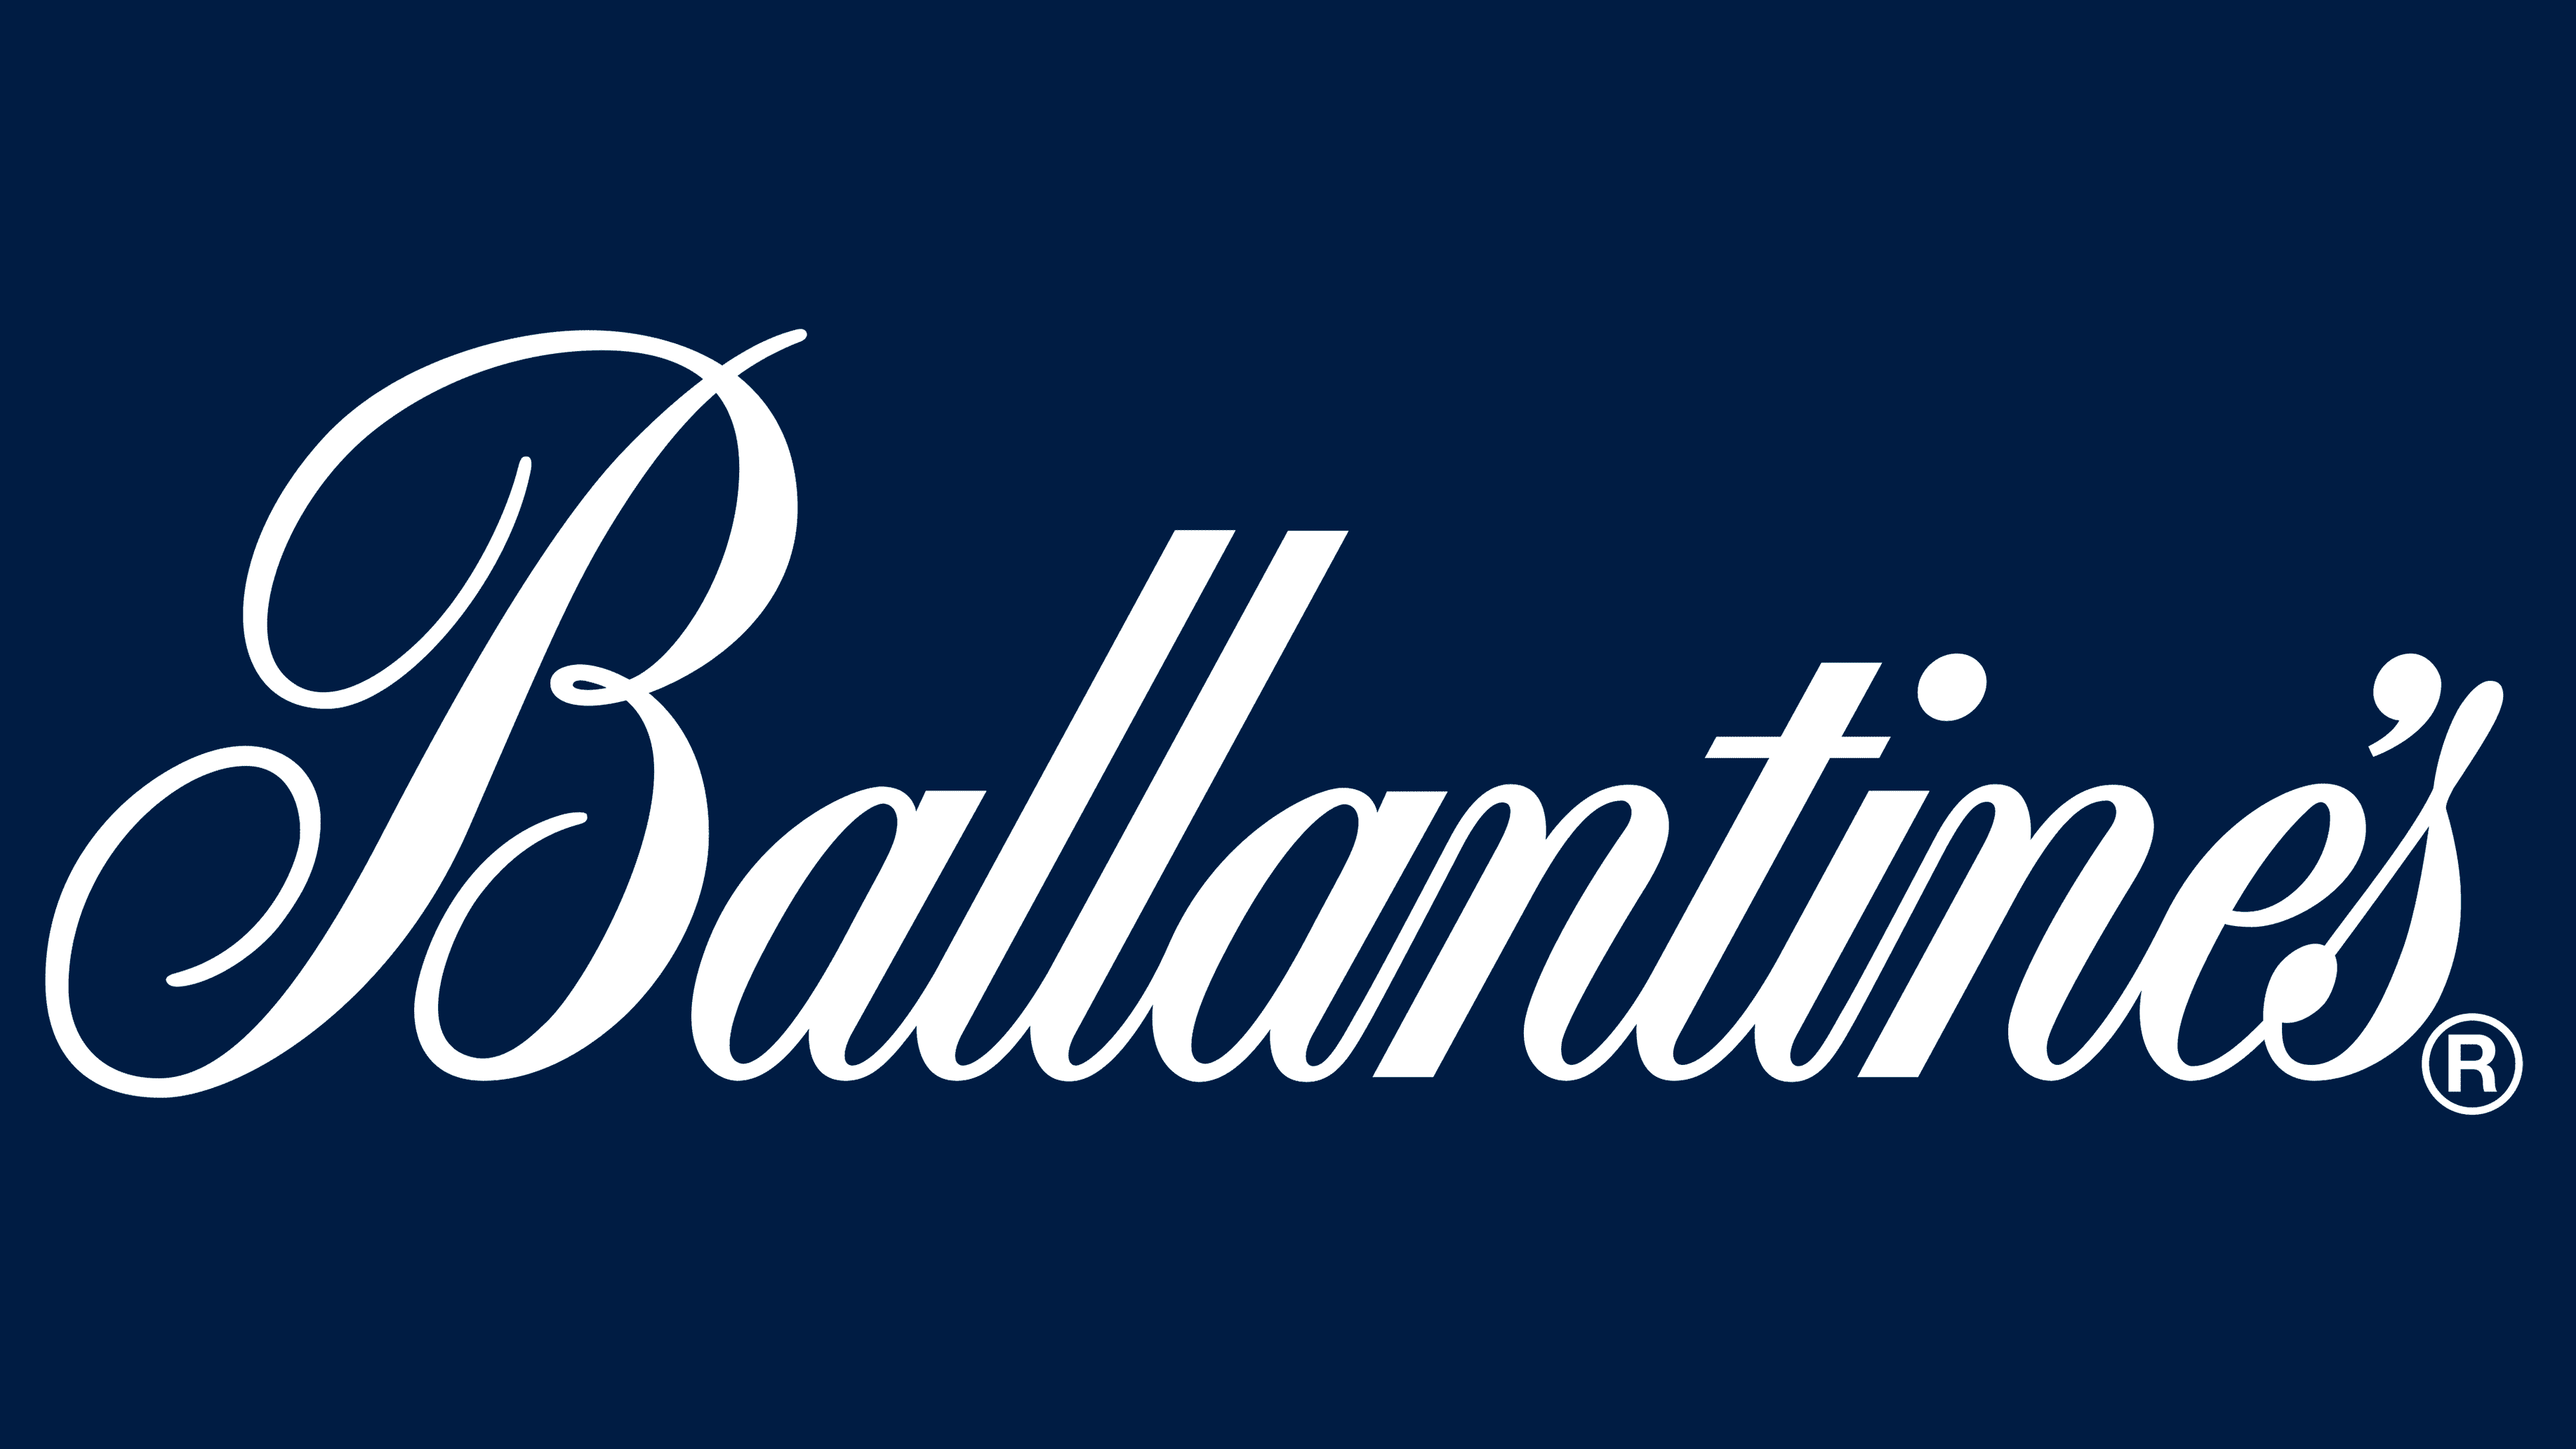 Ballantine’s Finest Whisky